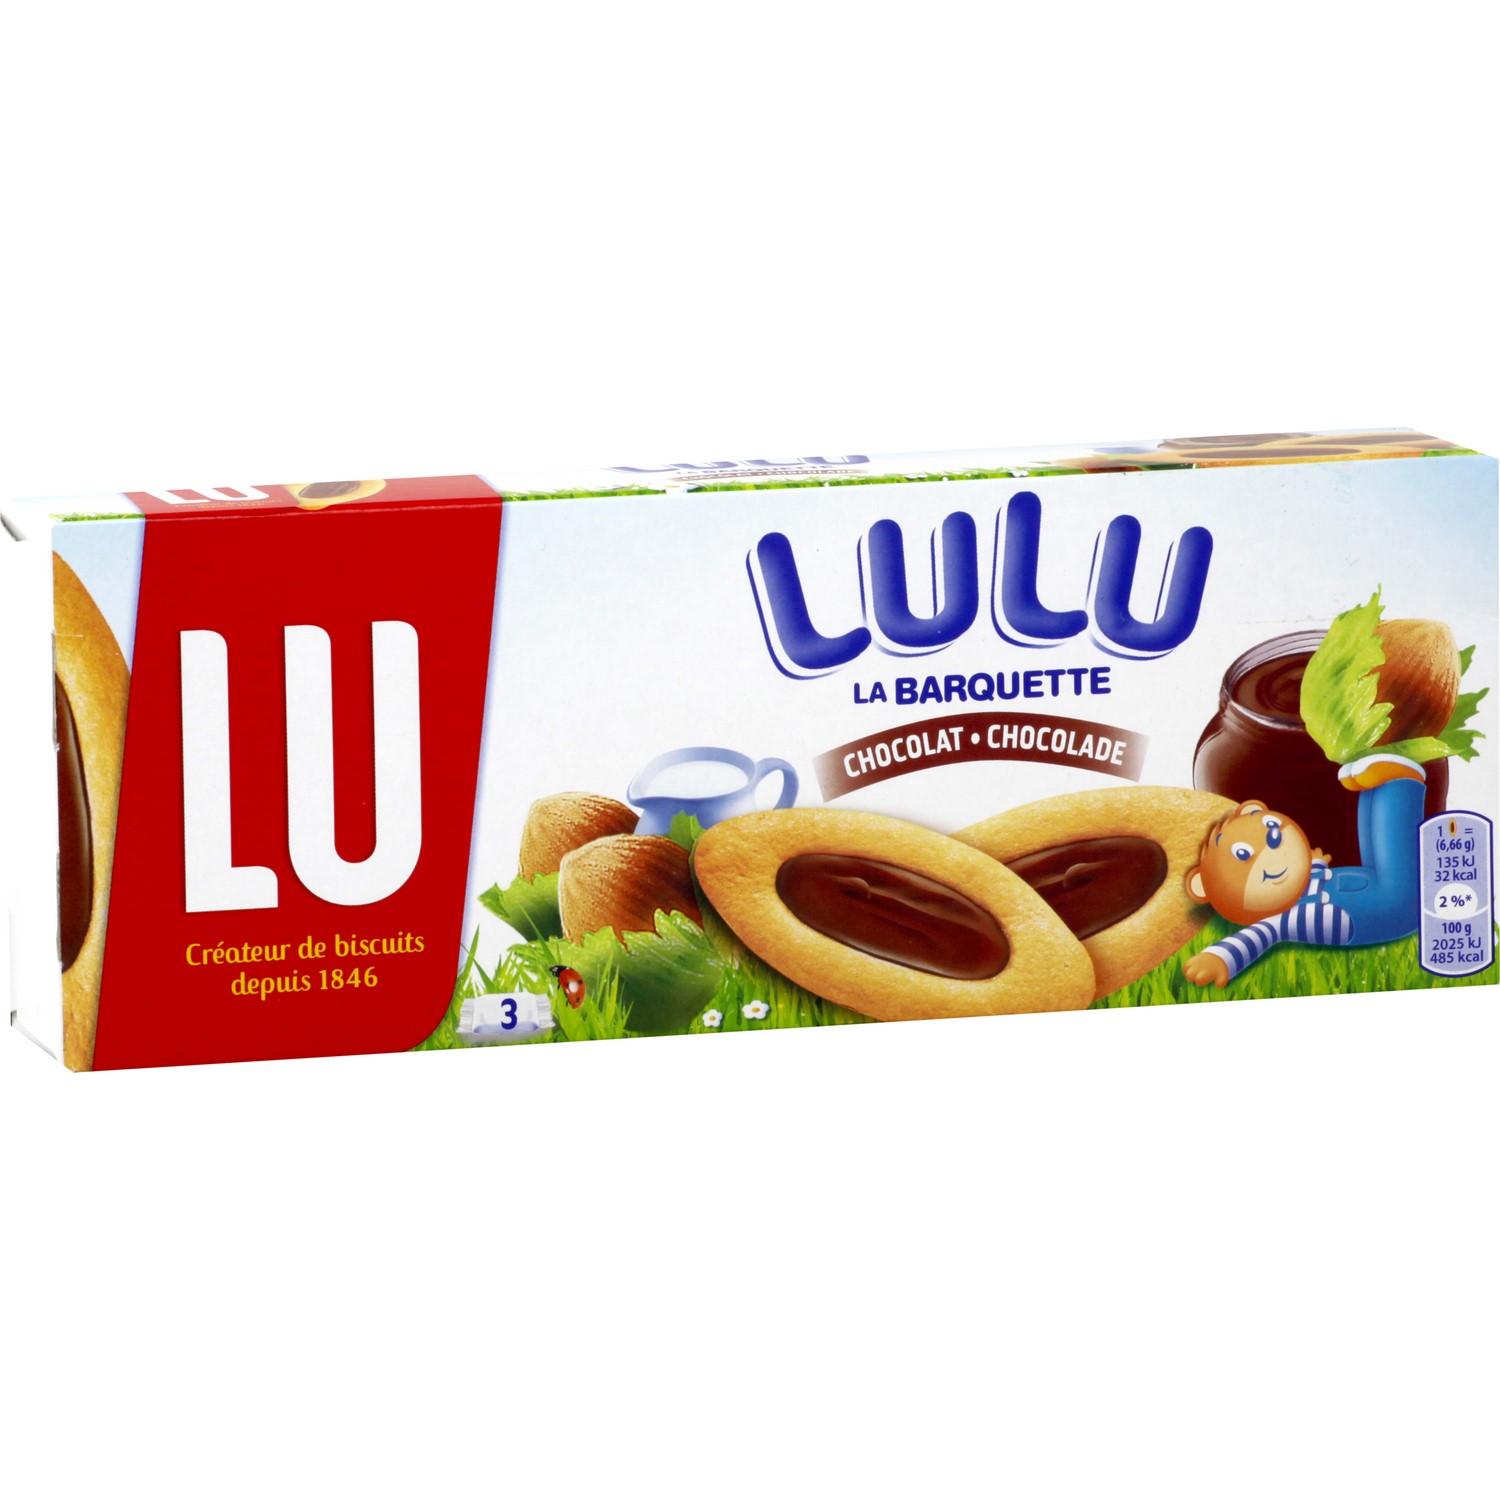 Lu Lulu la barquette chocolat lu - En promotion chez Netto